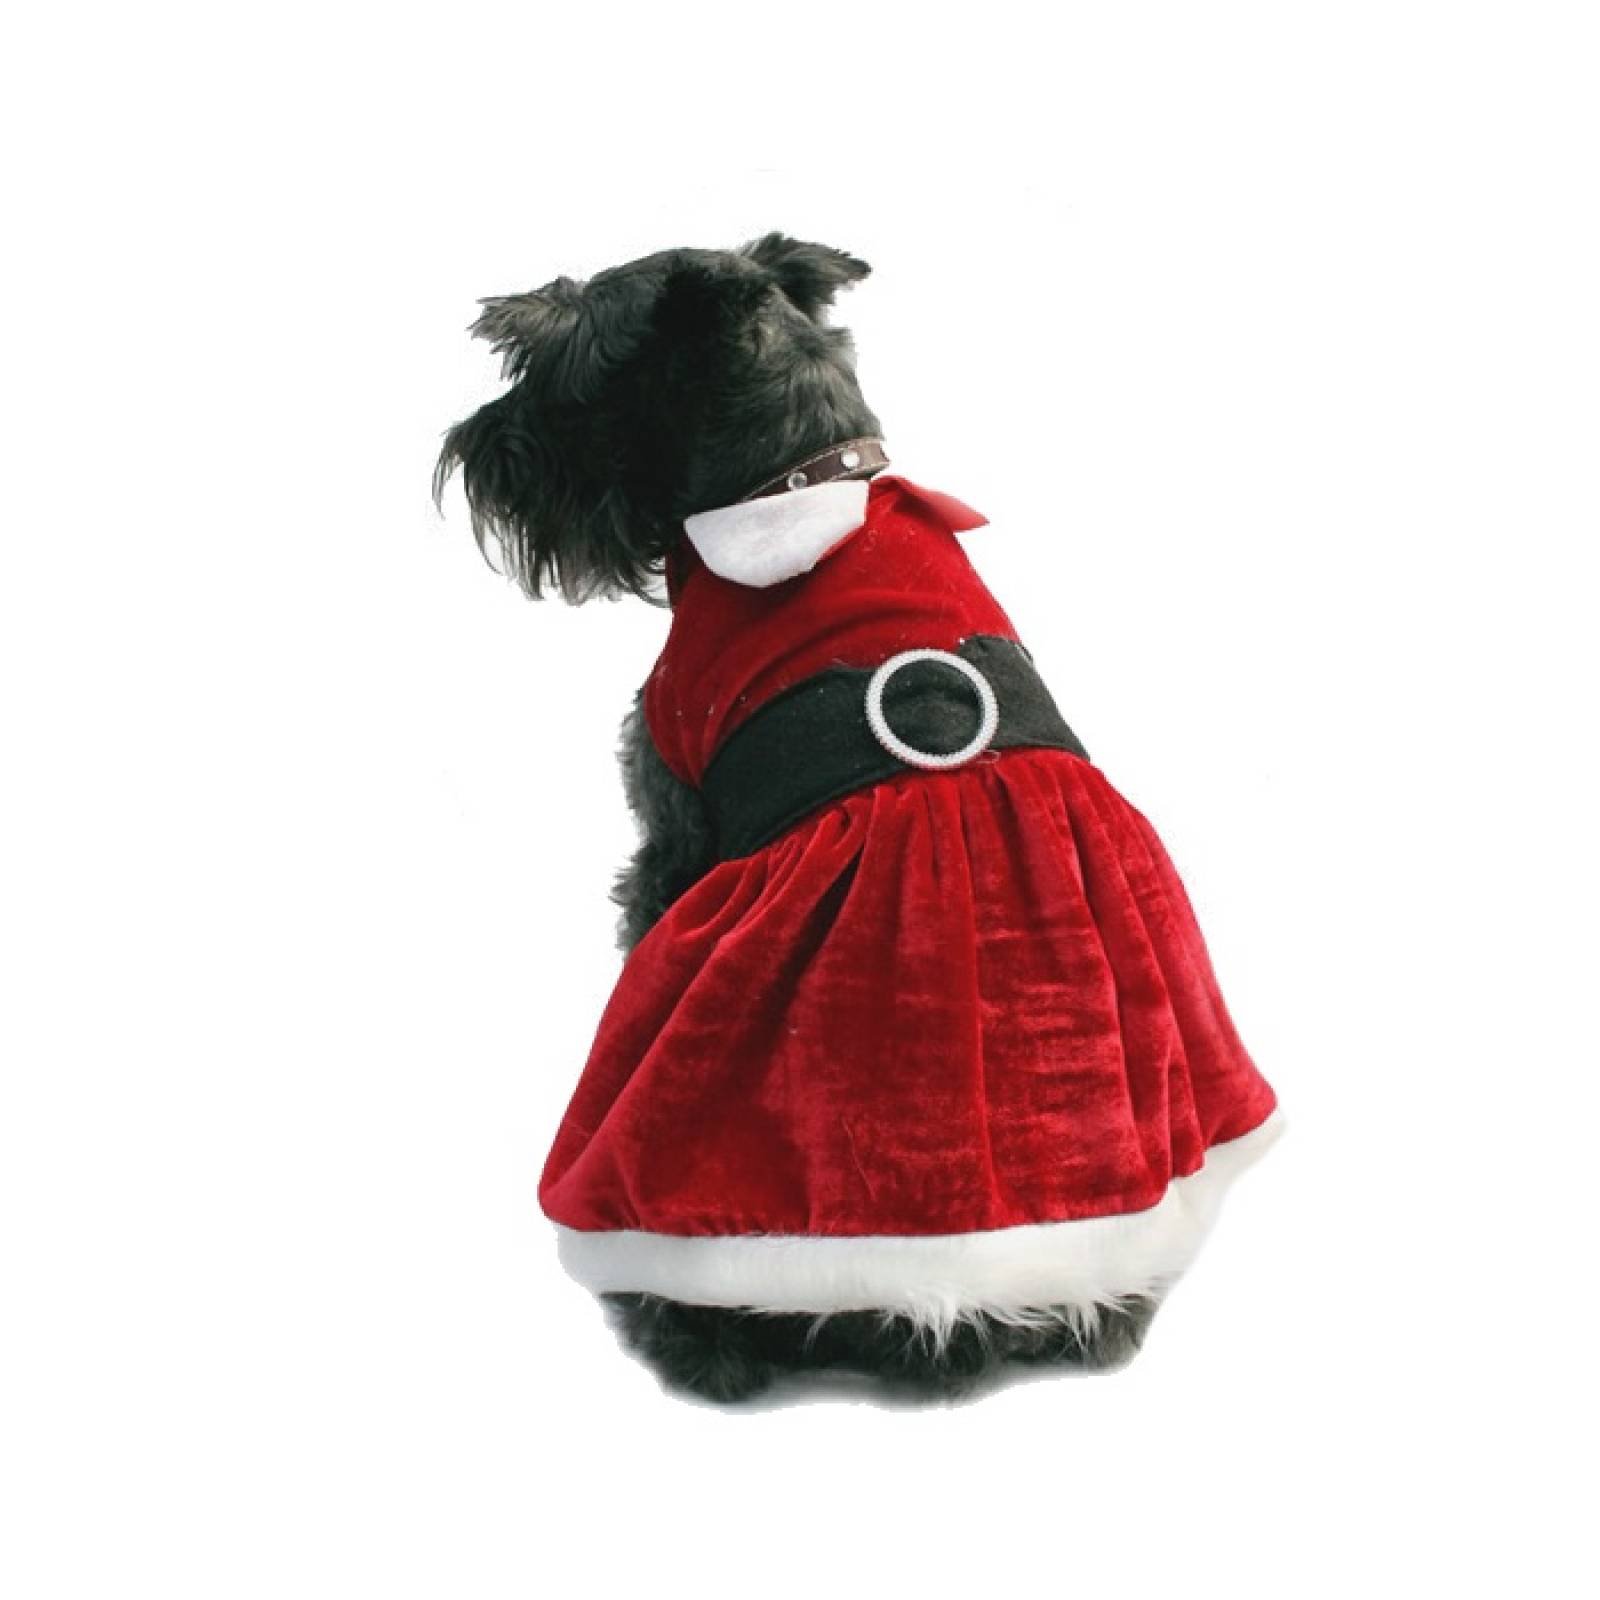 Disfraz Vestido Sra. Claus Navidad Perro Talla 4 Pet Pals